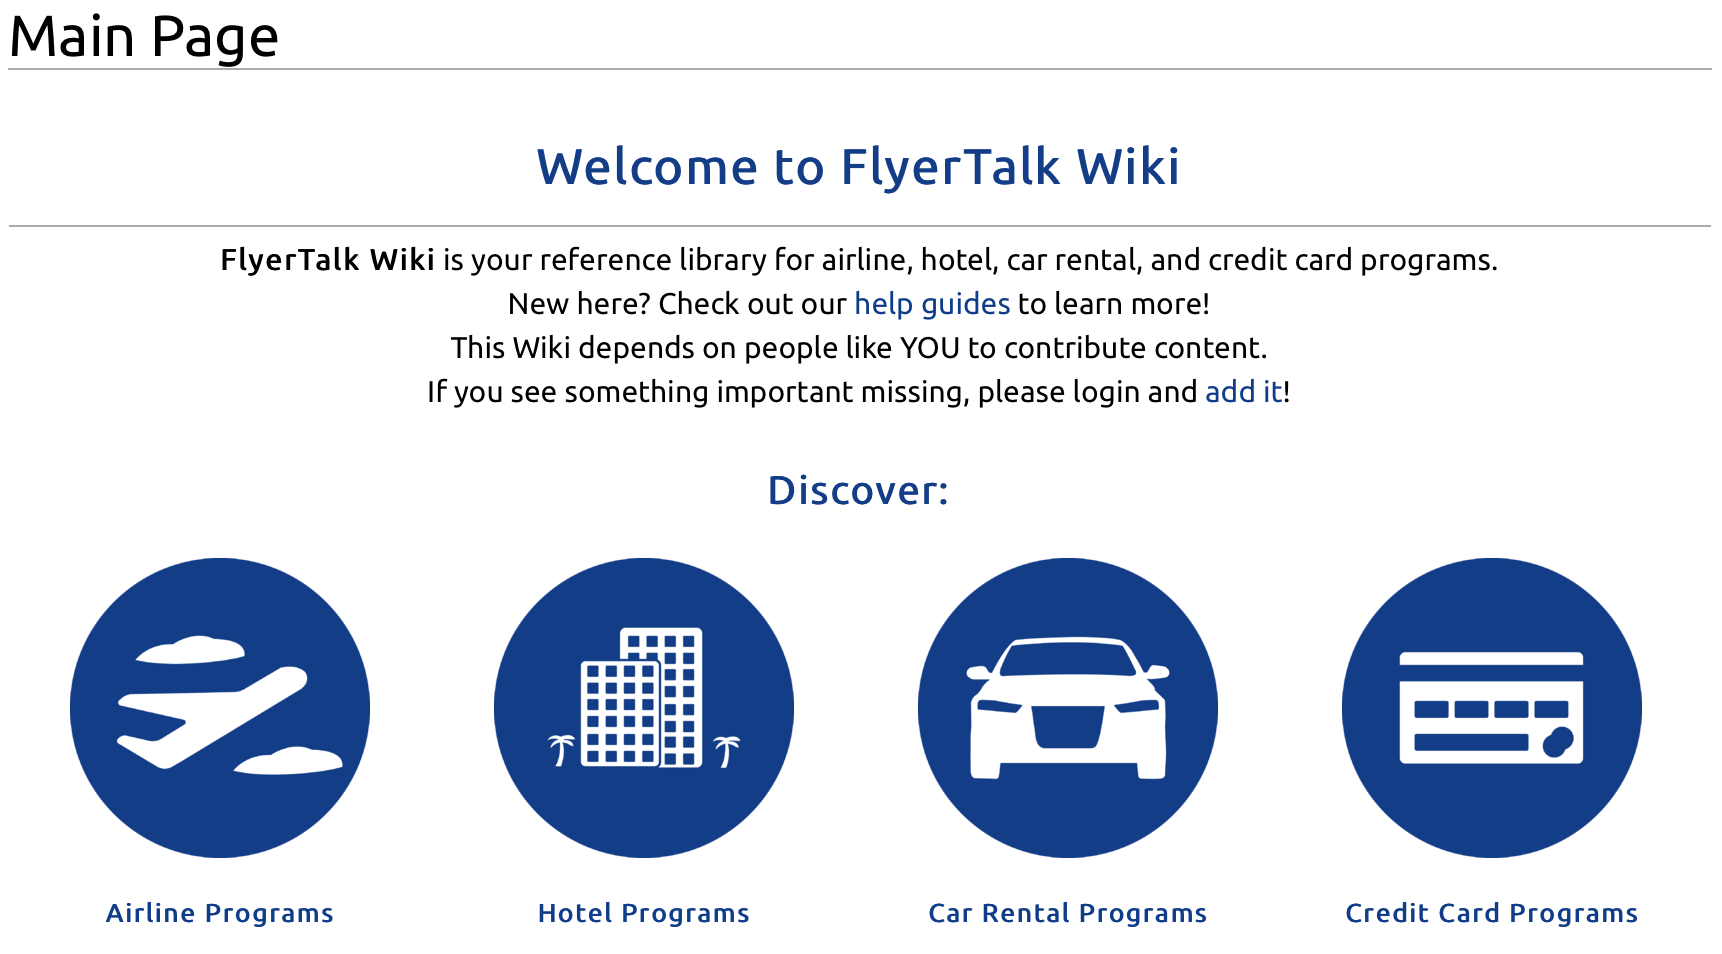 FlyerTalk Wiki access